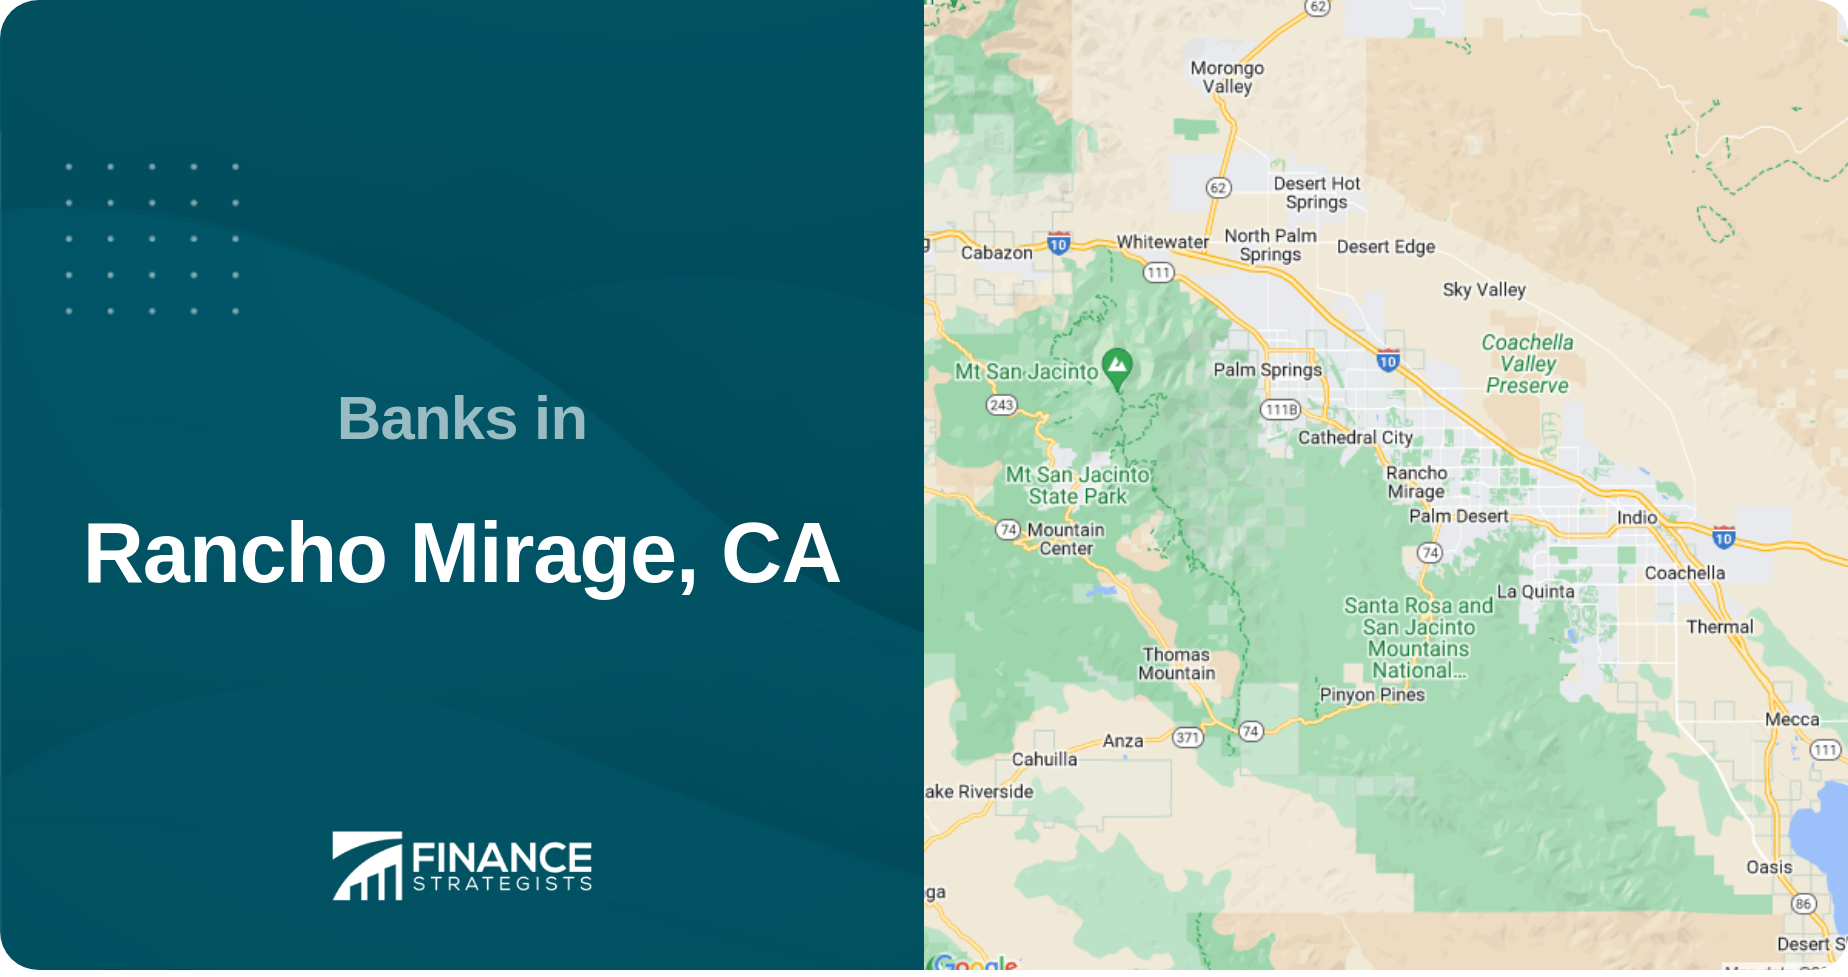 Banks in Rancho Mirage, CA